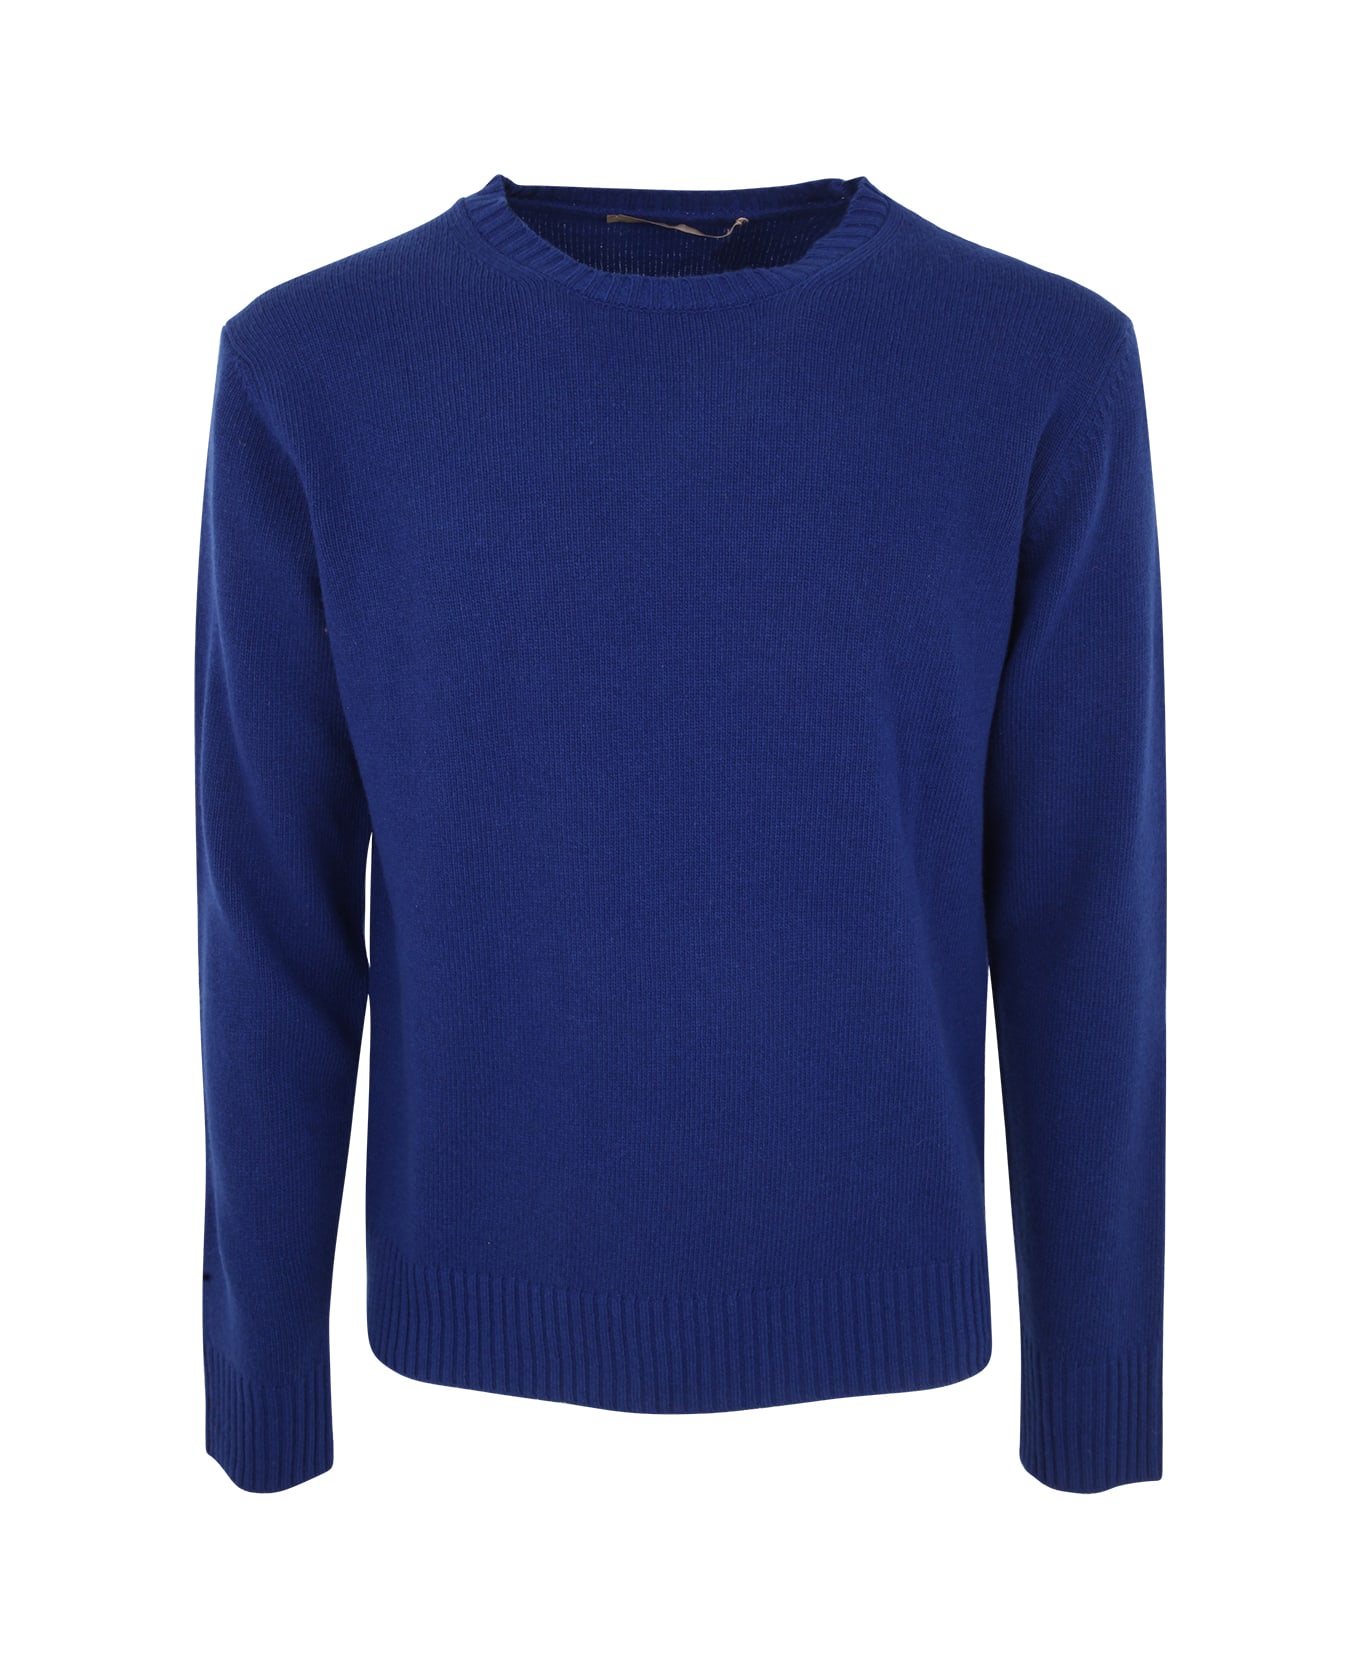 Nuur Long Sleeves Crew Neck Sweater - Bluette ニットウェア